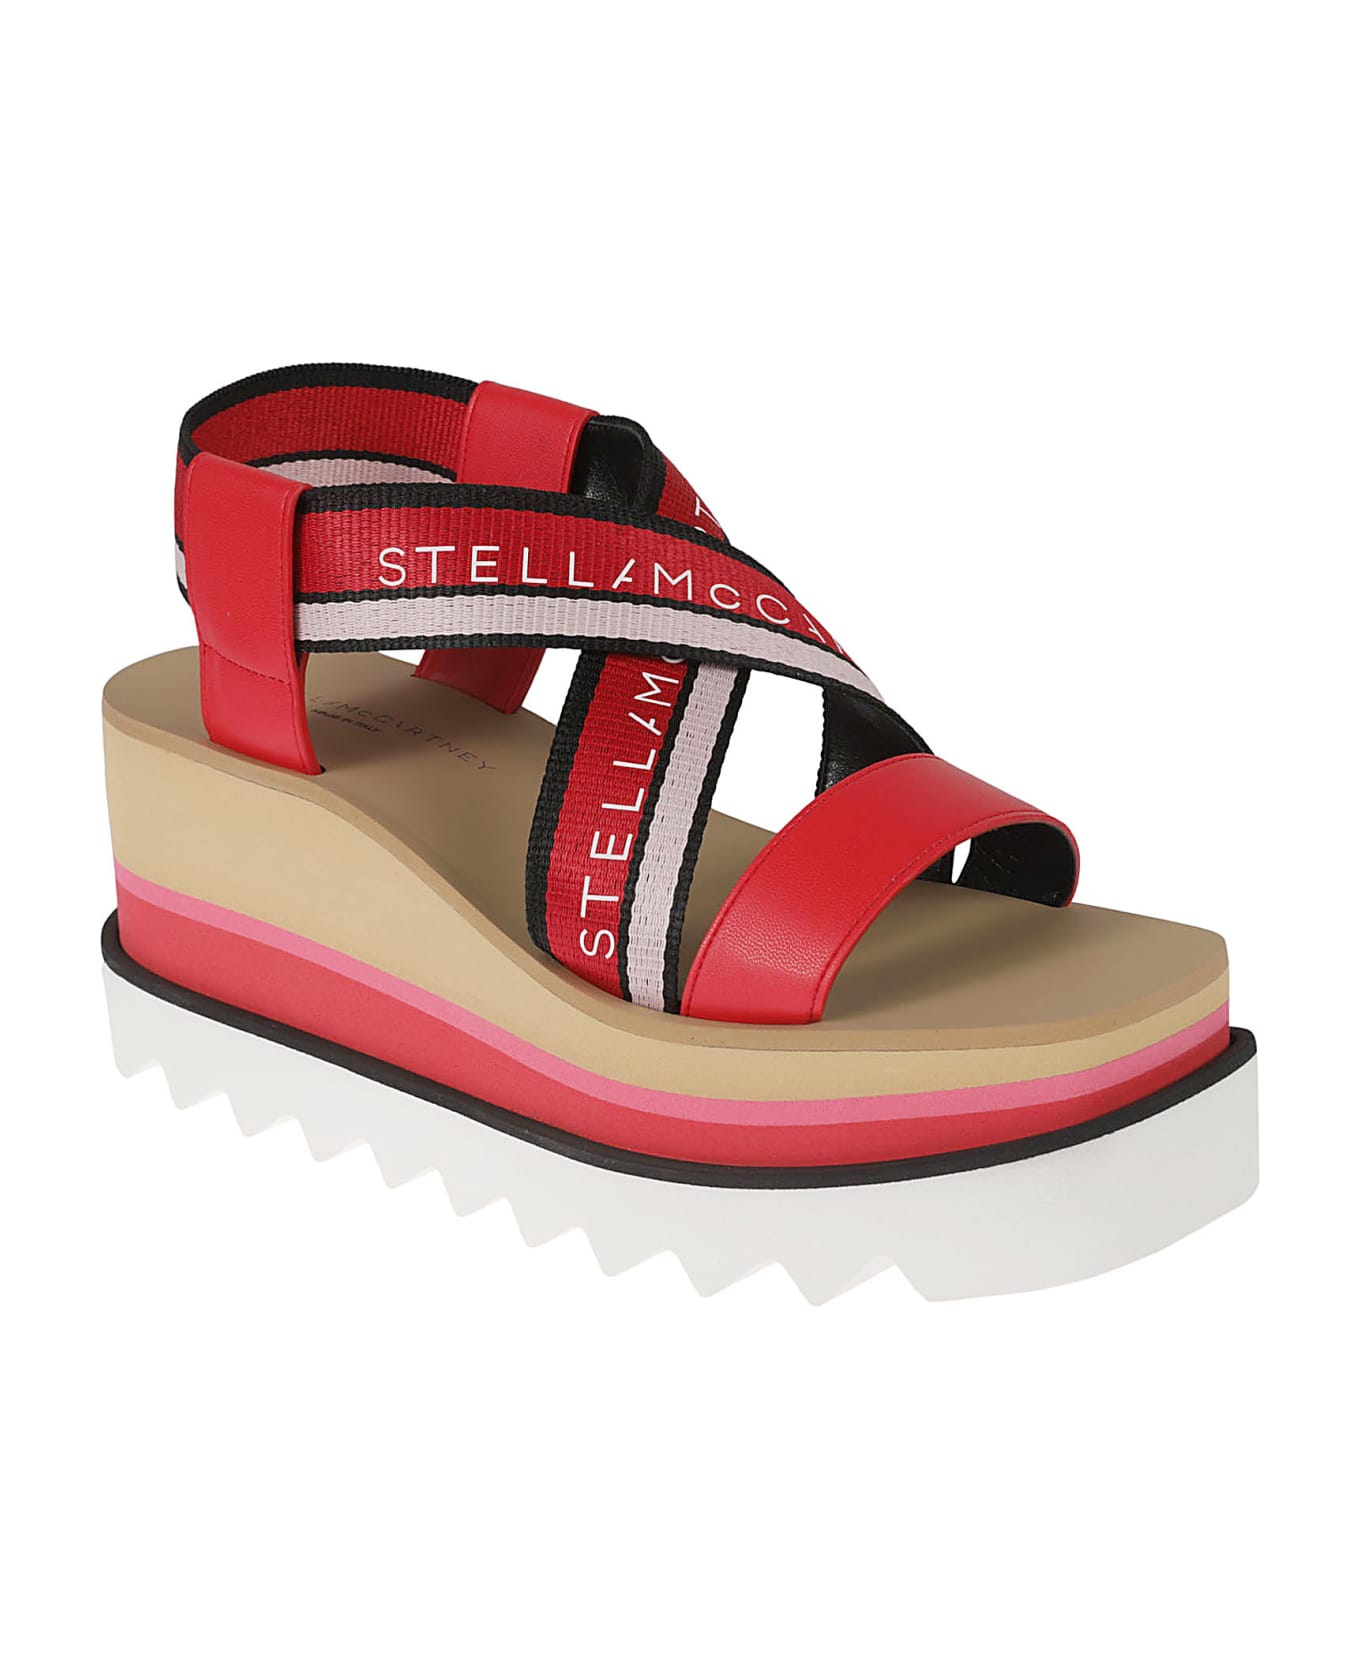 Stella McCartney Stripy Webbing Sandals - Red/pink